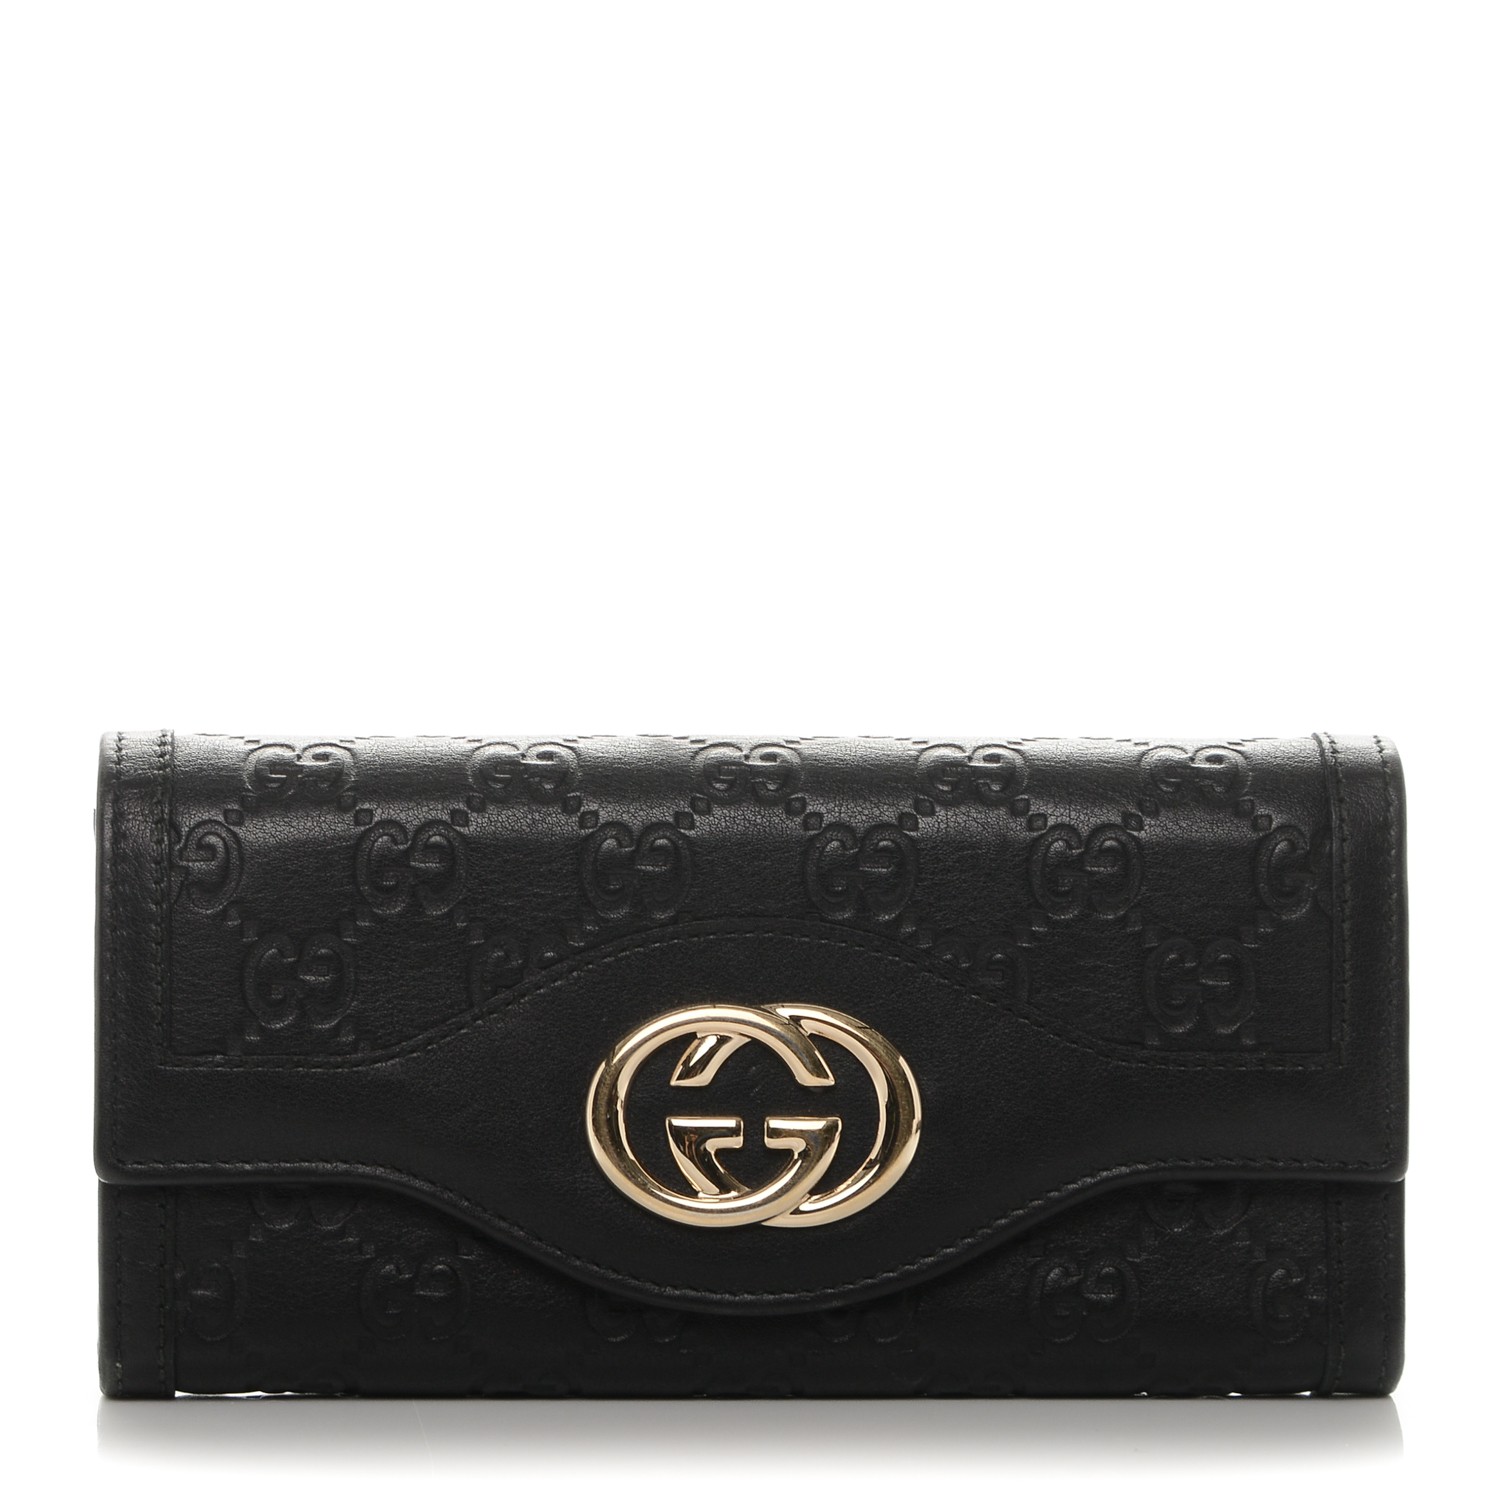 GUCCI Guccissima Interlocking G Continental Wallet Black 186809 ...